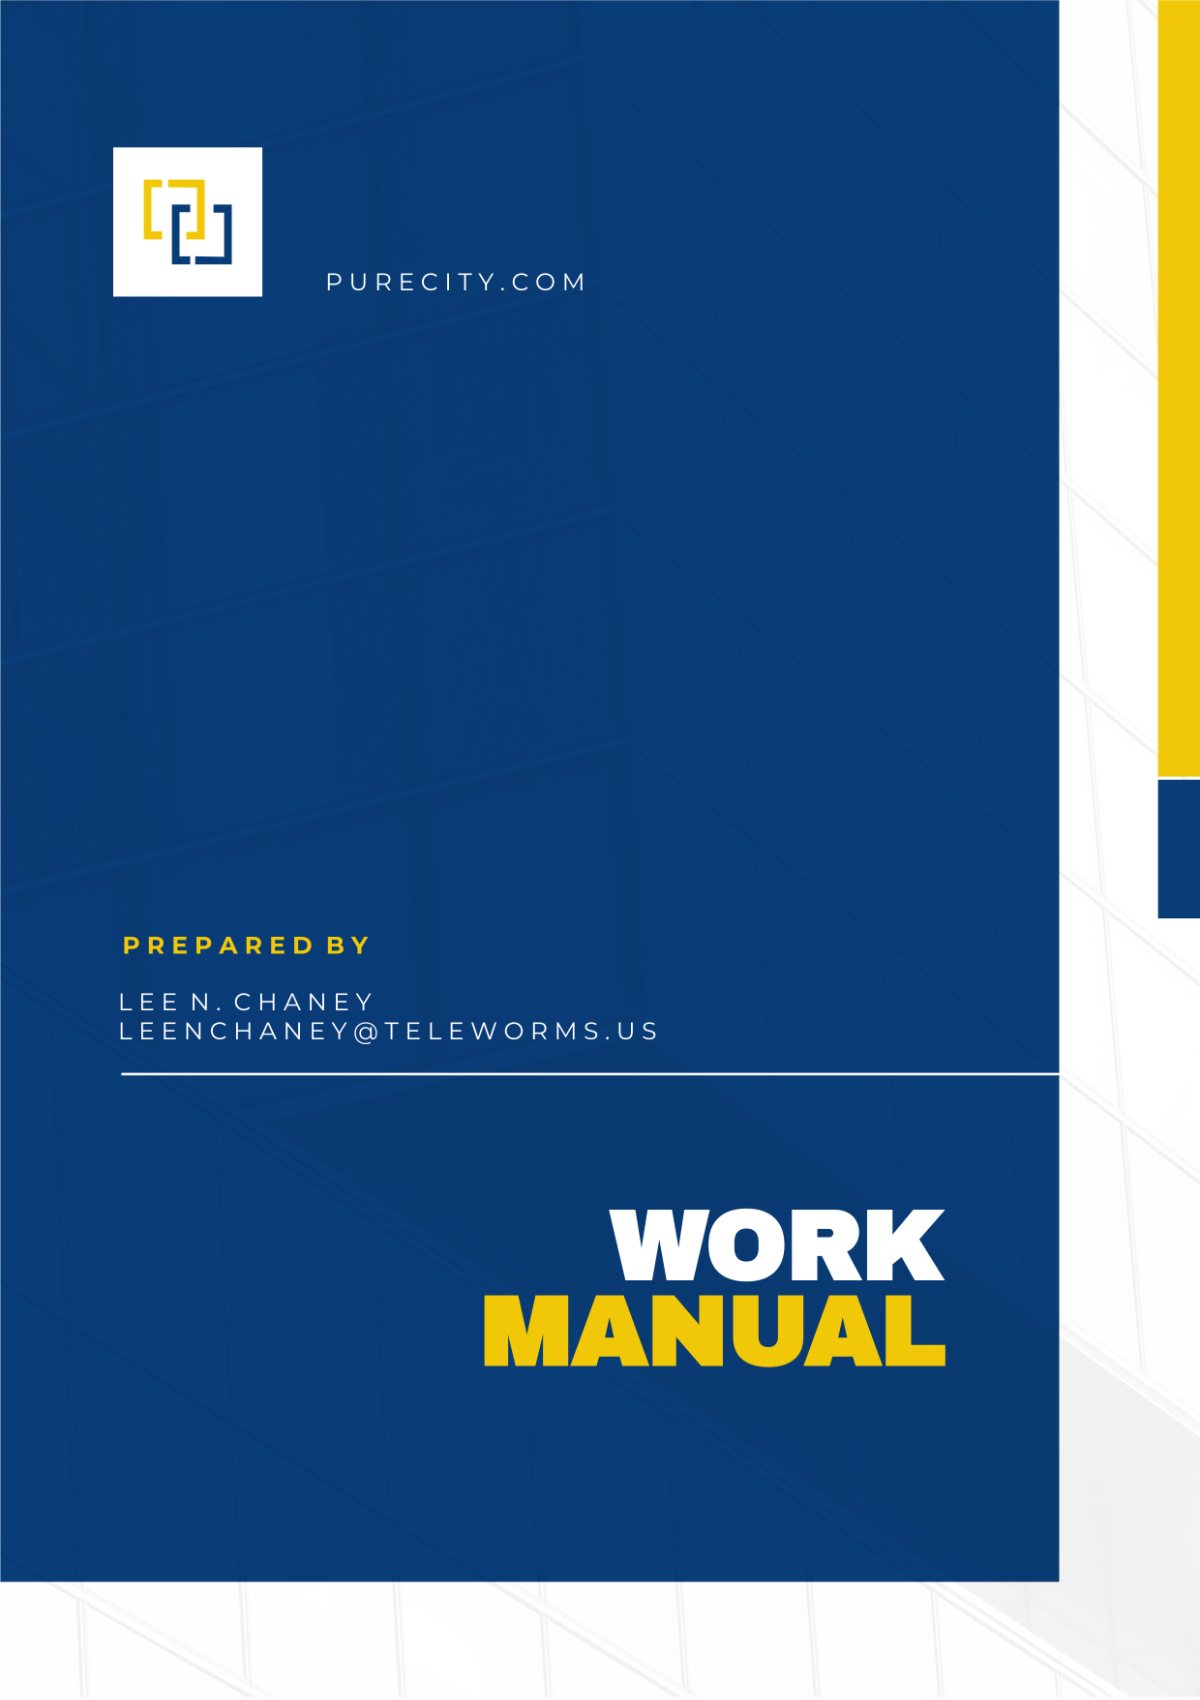 Free Work Manual Template